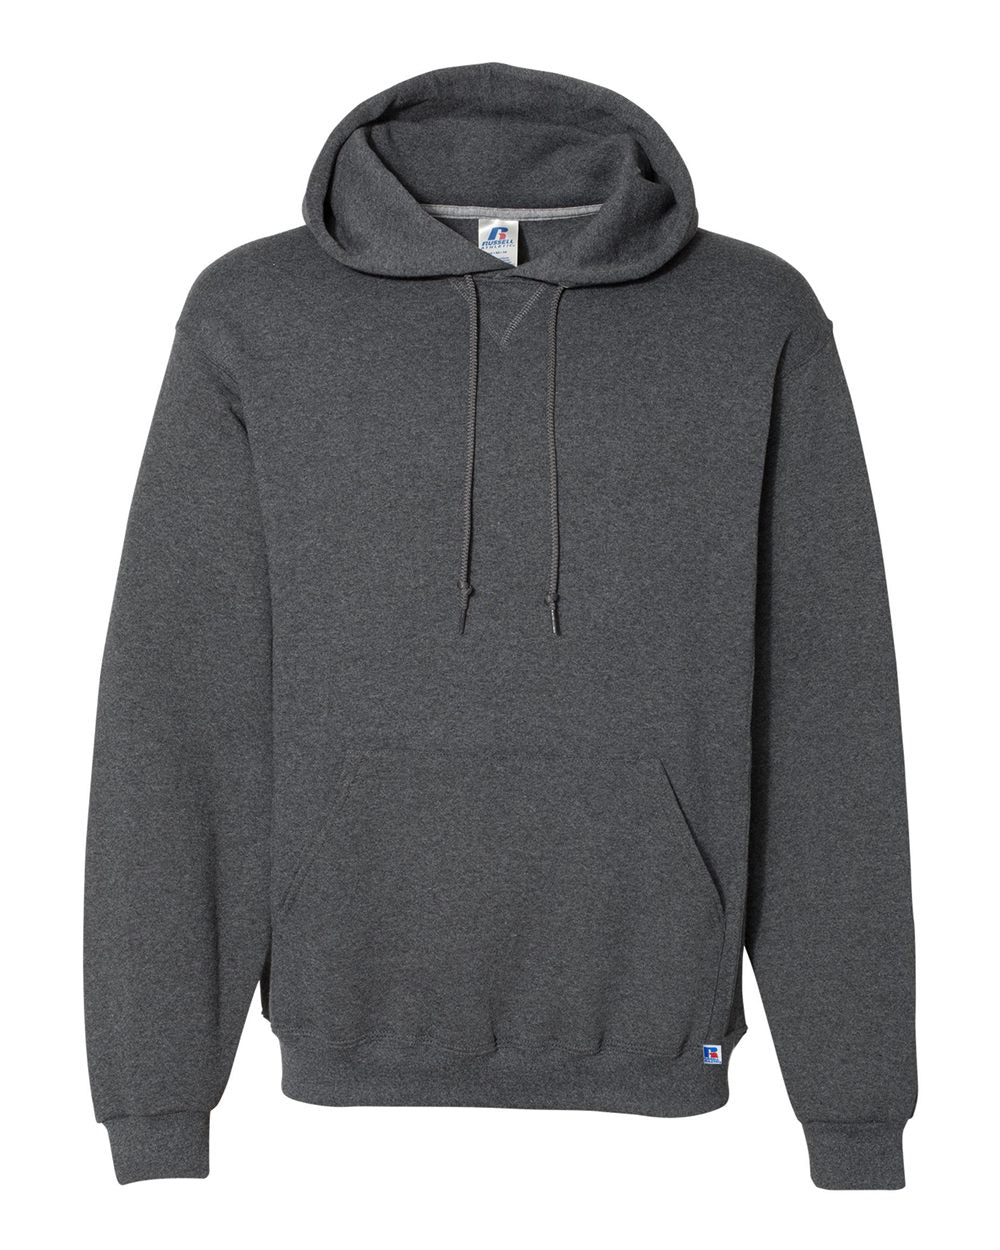 Russell Athletic Dri Power® Hooded Sweatshirt 695HBM #color_Black Heather